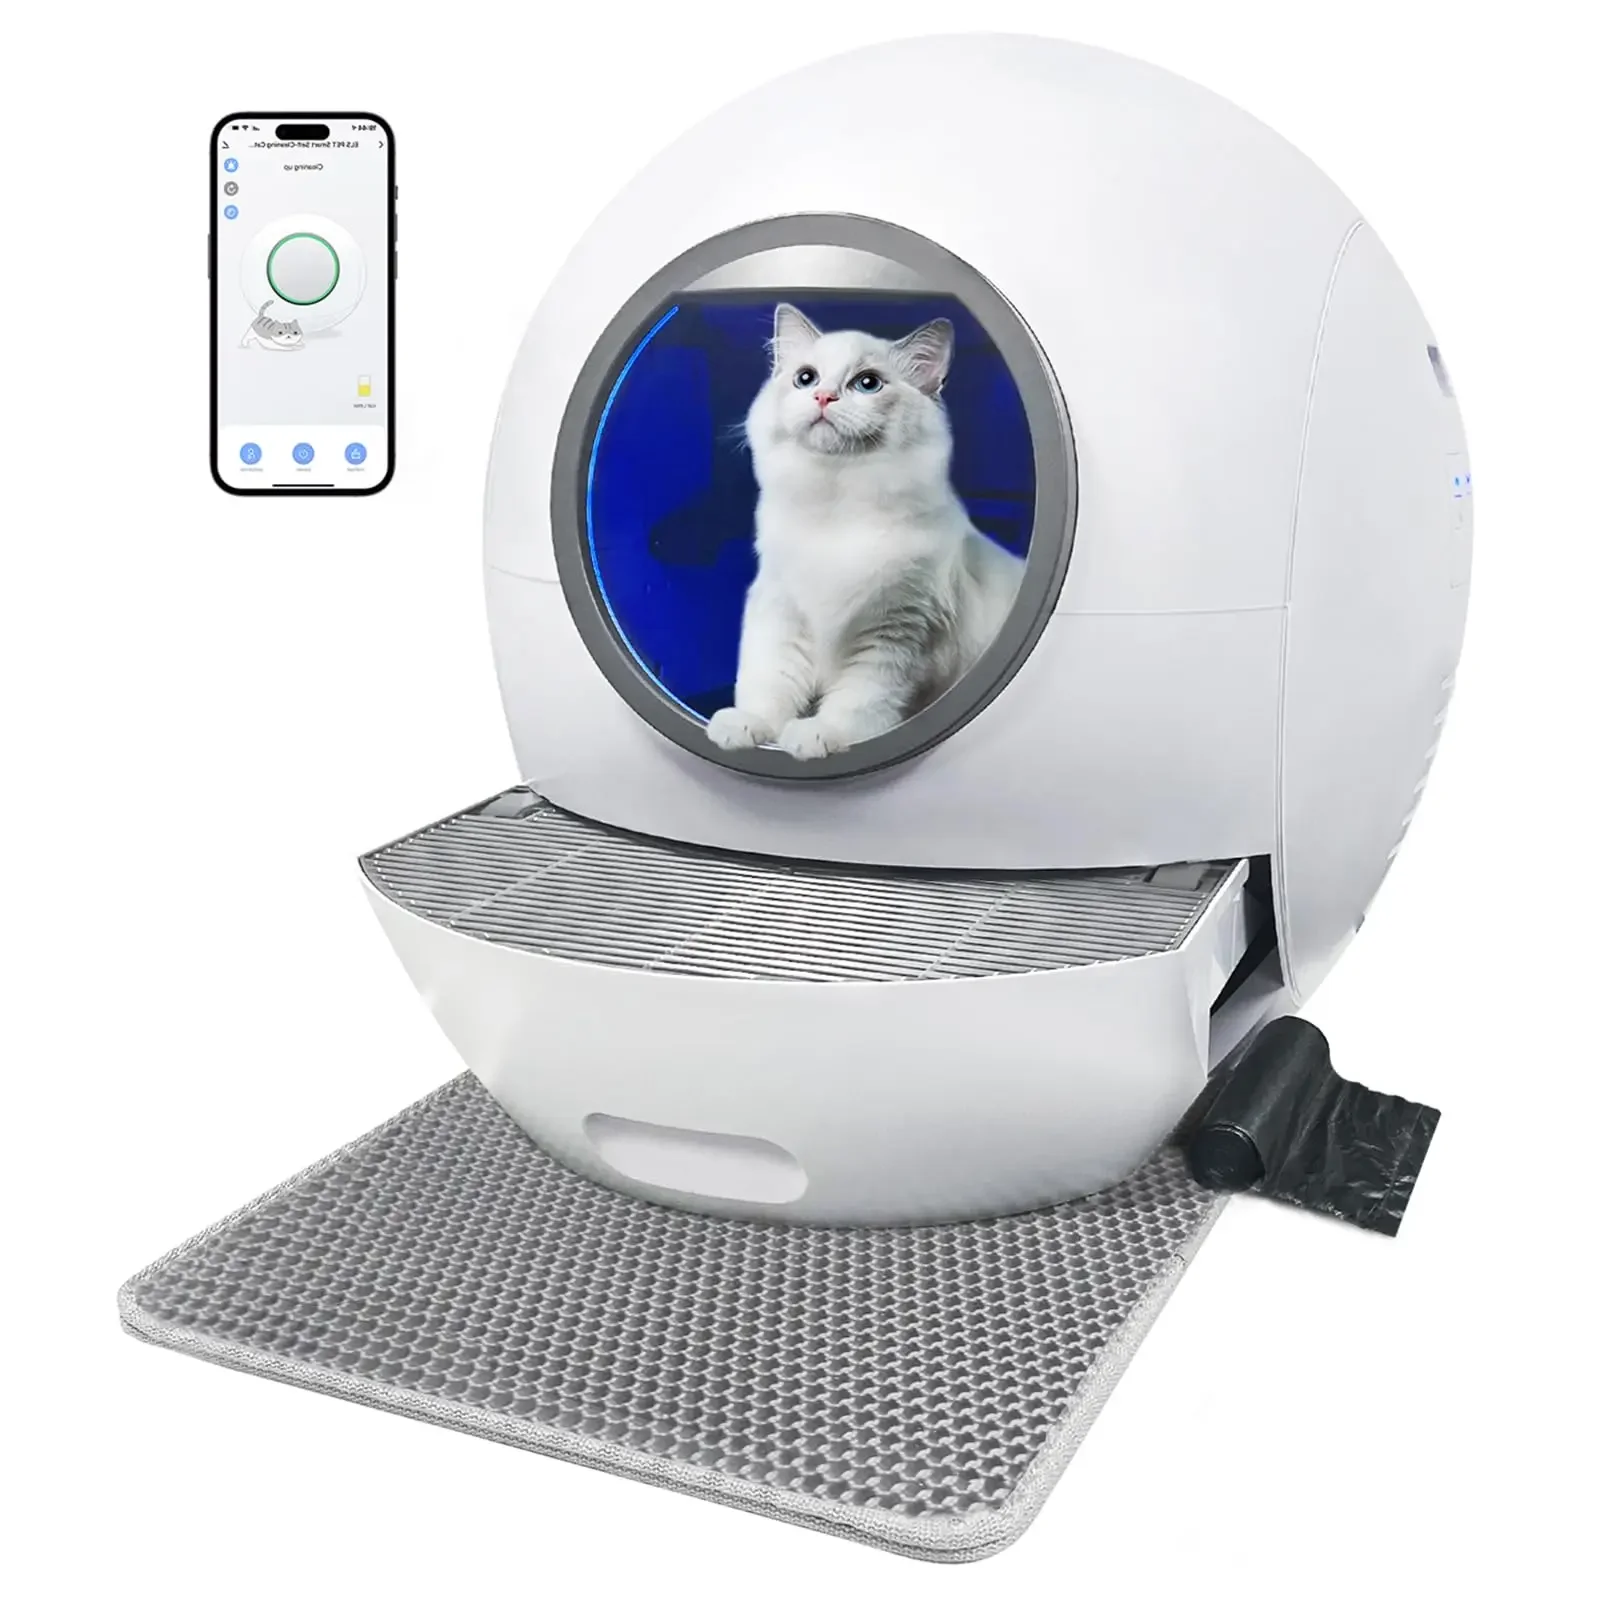 Els-caja de arena para gatos, caja de arena por aplicación automática con Control, Monitor inteligente, sin olor, Extra grande, para múltiples gatos